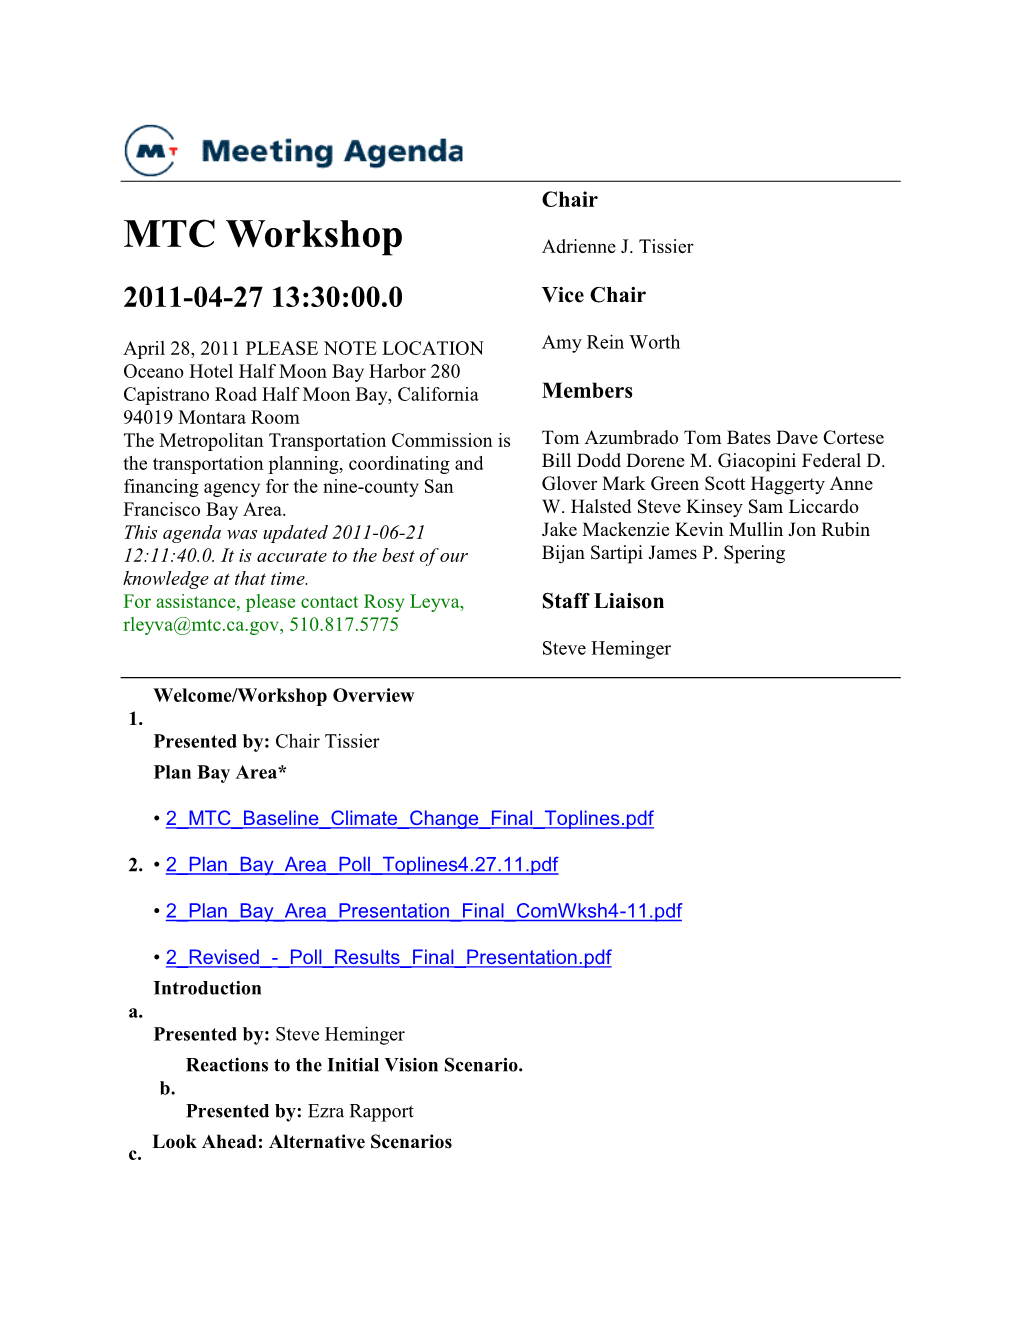 MTC Meeting Agenda